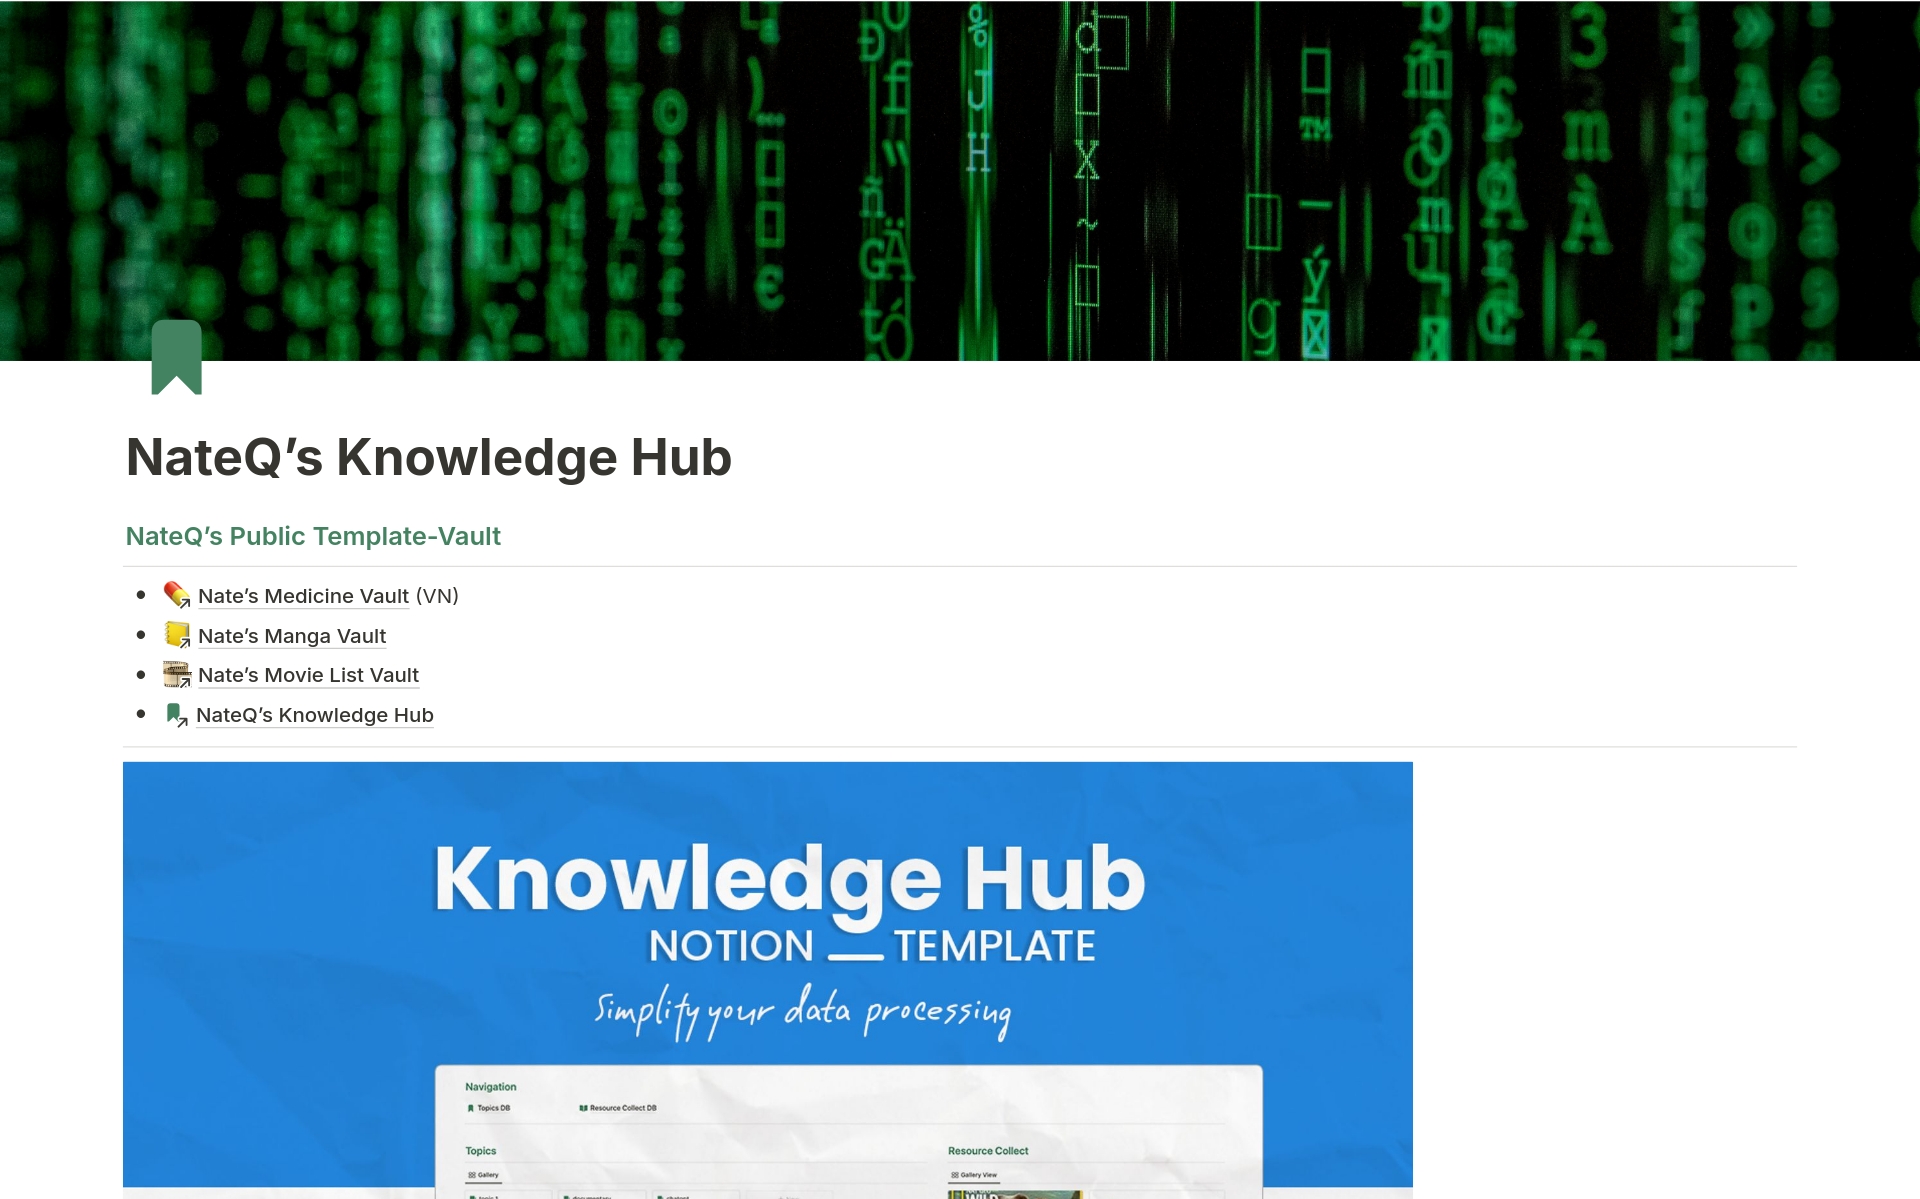 Aperçu du modèle de Knowledge Hub